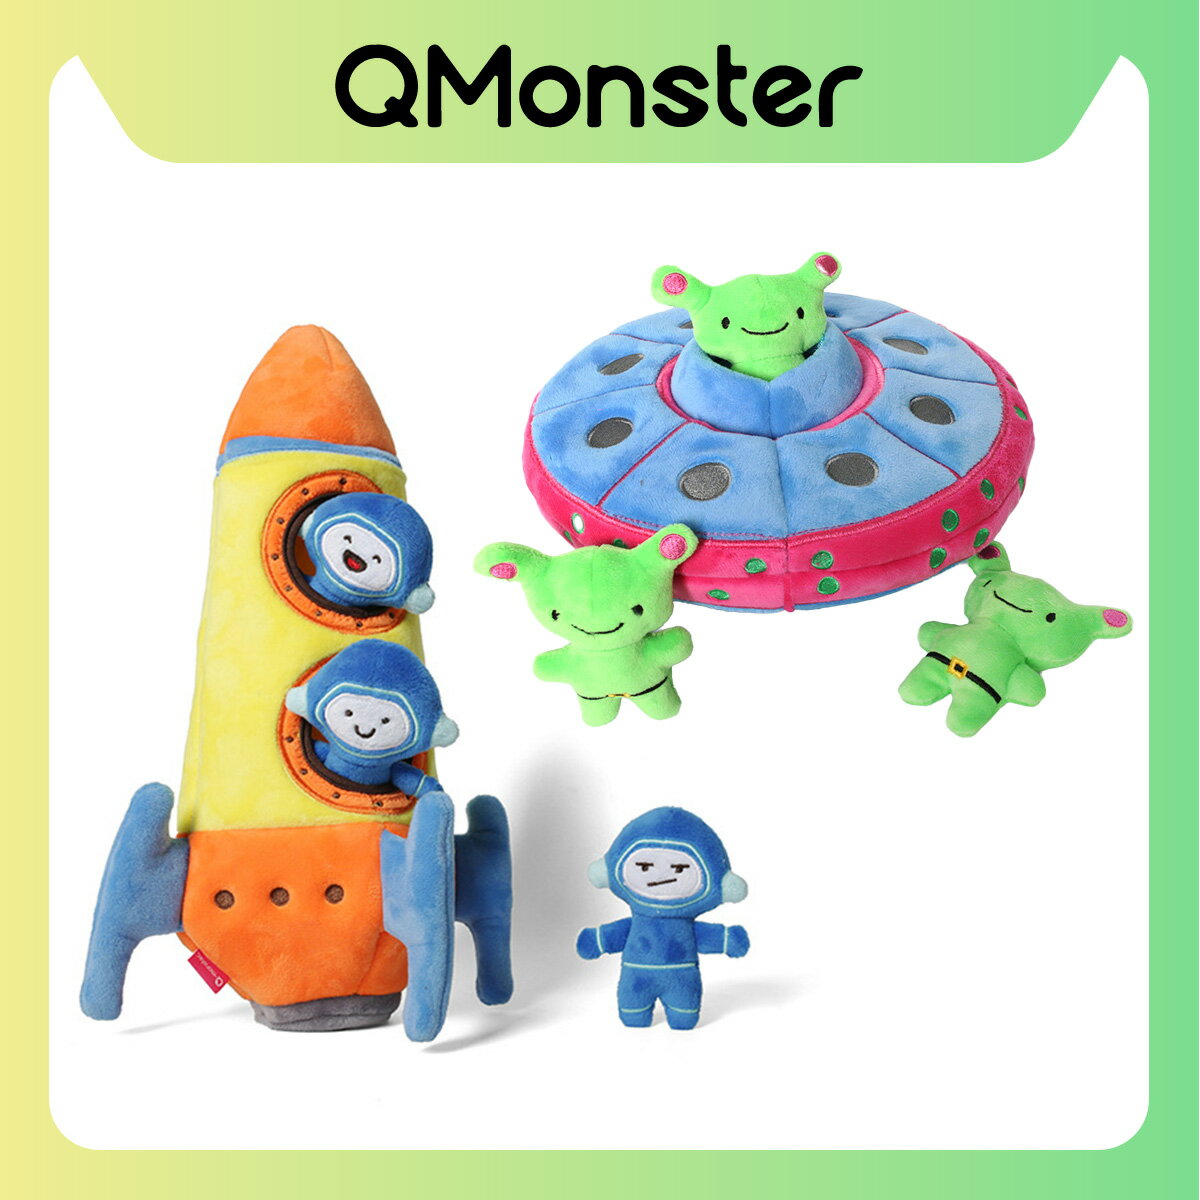 Q-MONSTER 掏掏玩具 火箭 UFO 狗玩具 貓玩具 益智玩具 藏食玩具 Q MONSTER